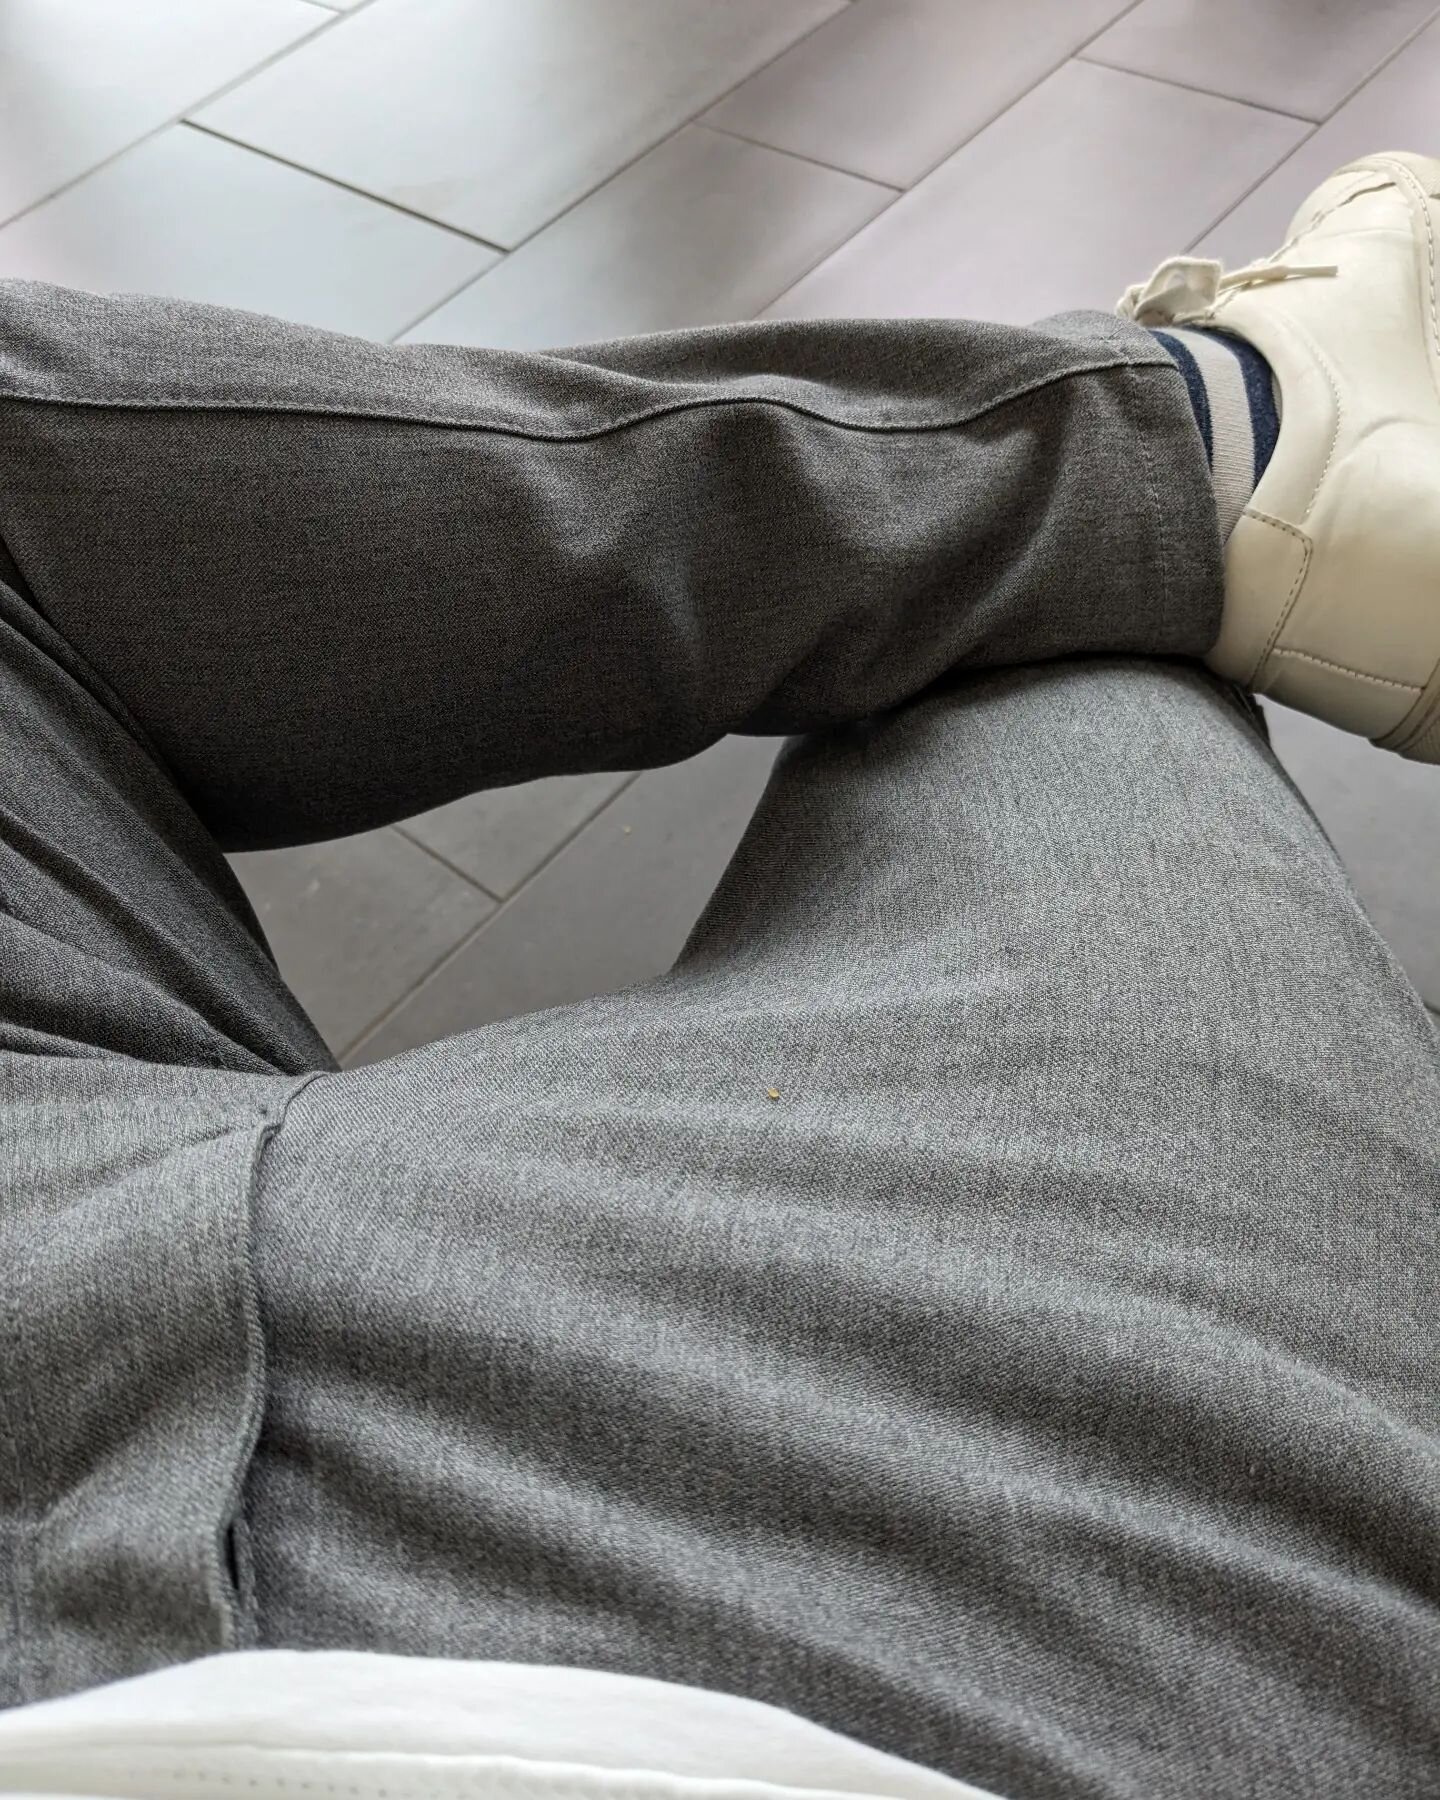 Grey and white! Simple and stylish! I love those comfy trousers by @zara @zaraman 
#greytrousers #whitetee #minimaliststyle #whitetrainers #fashionformen #minimalistfashion